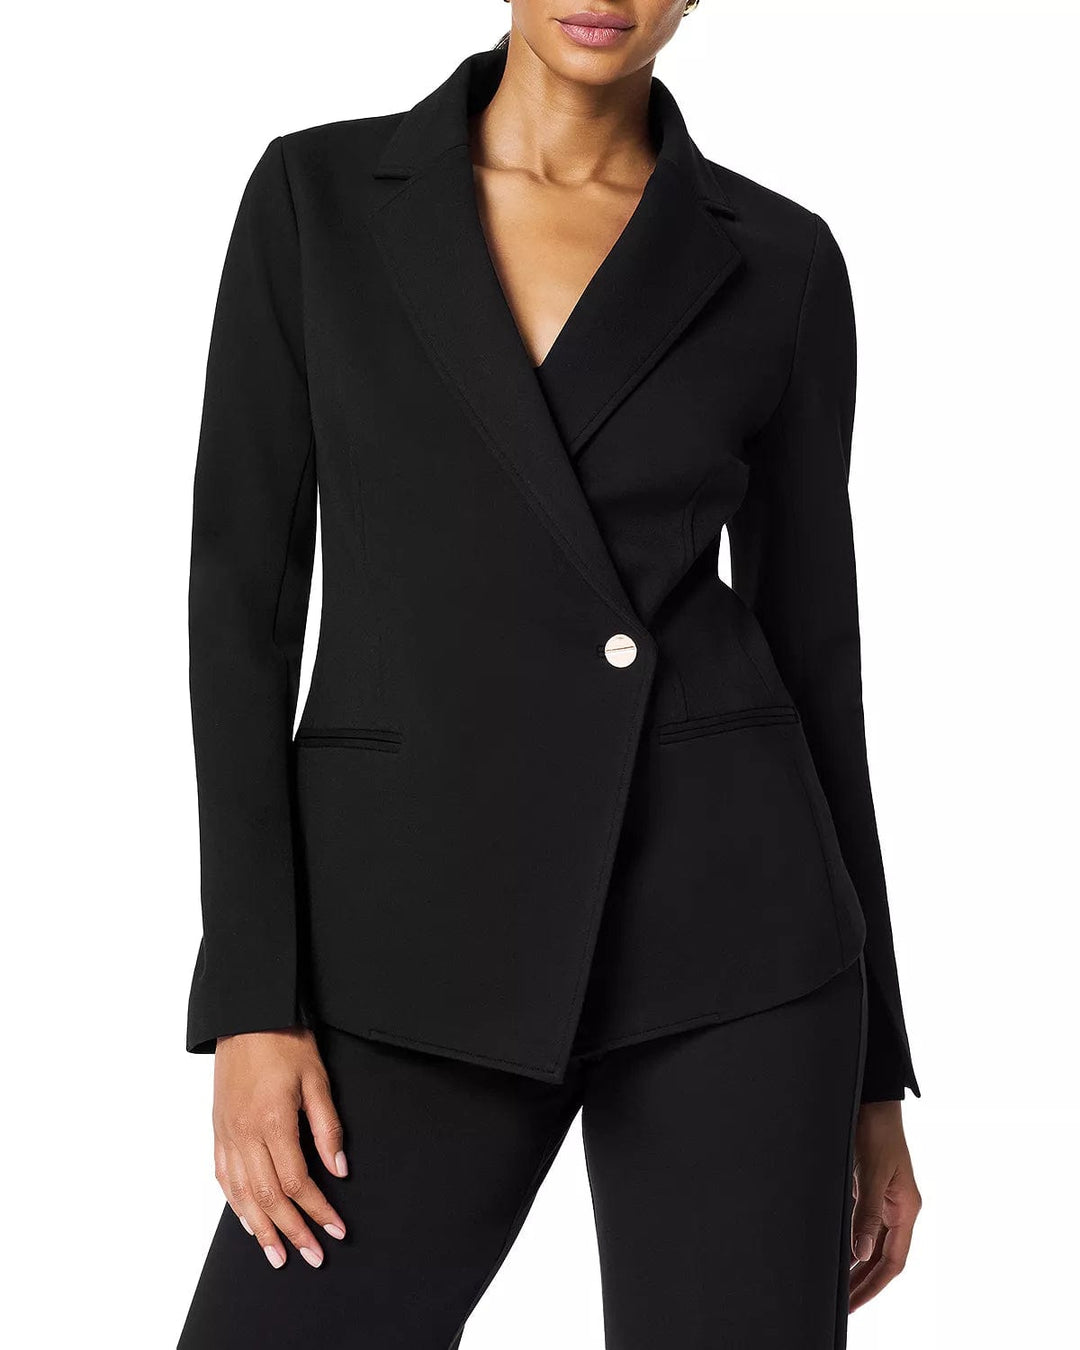 solovedress All Black 2 Piece Casual Notch Lapel Women Suit